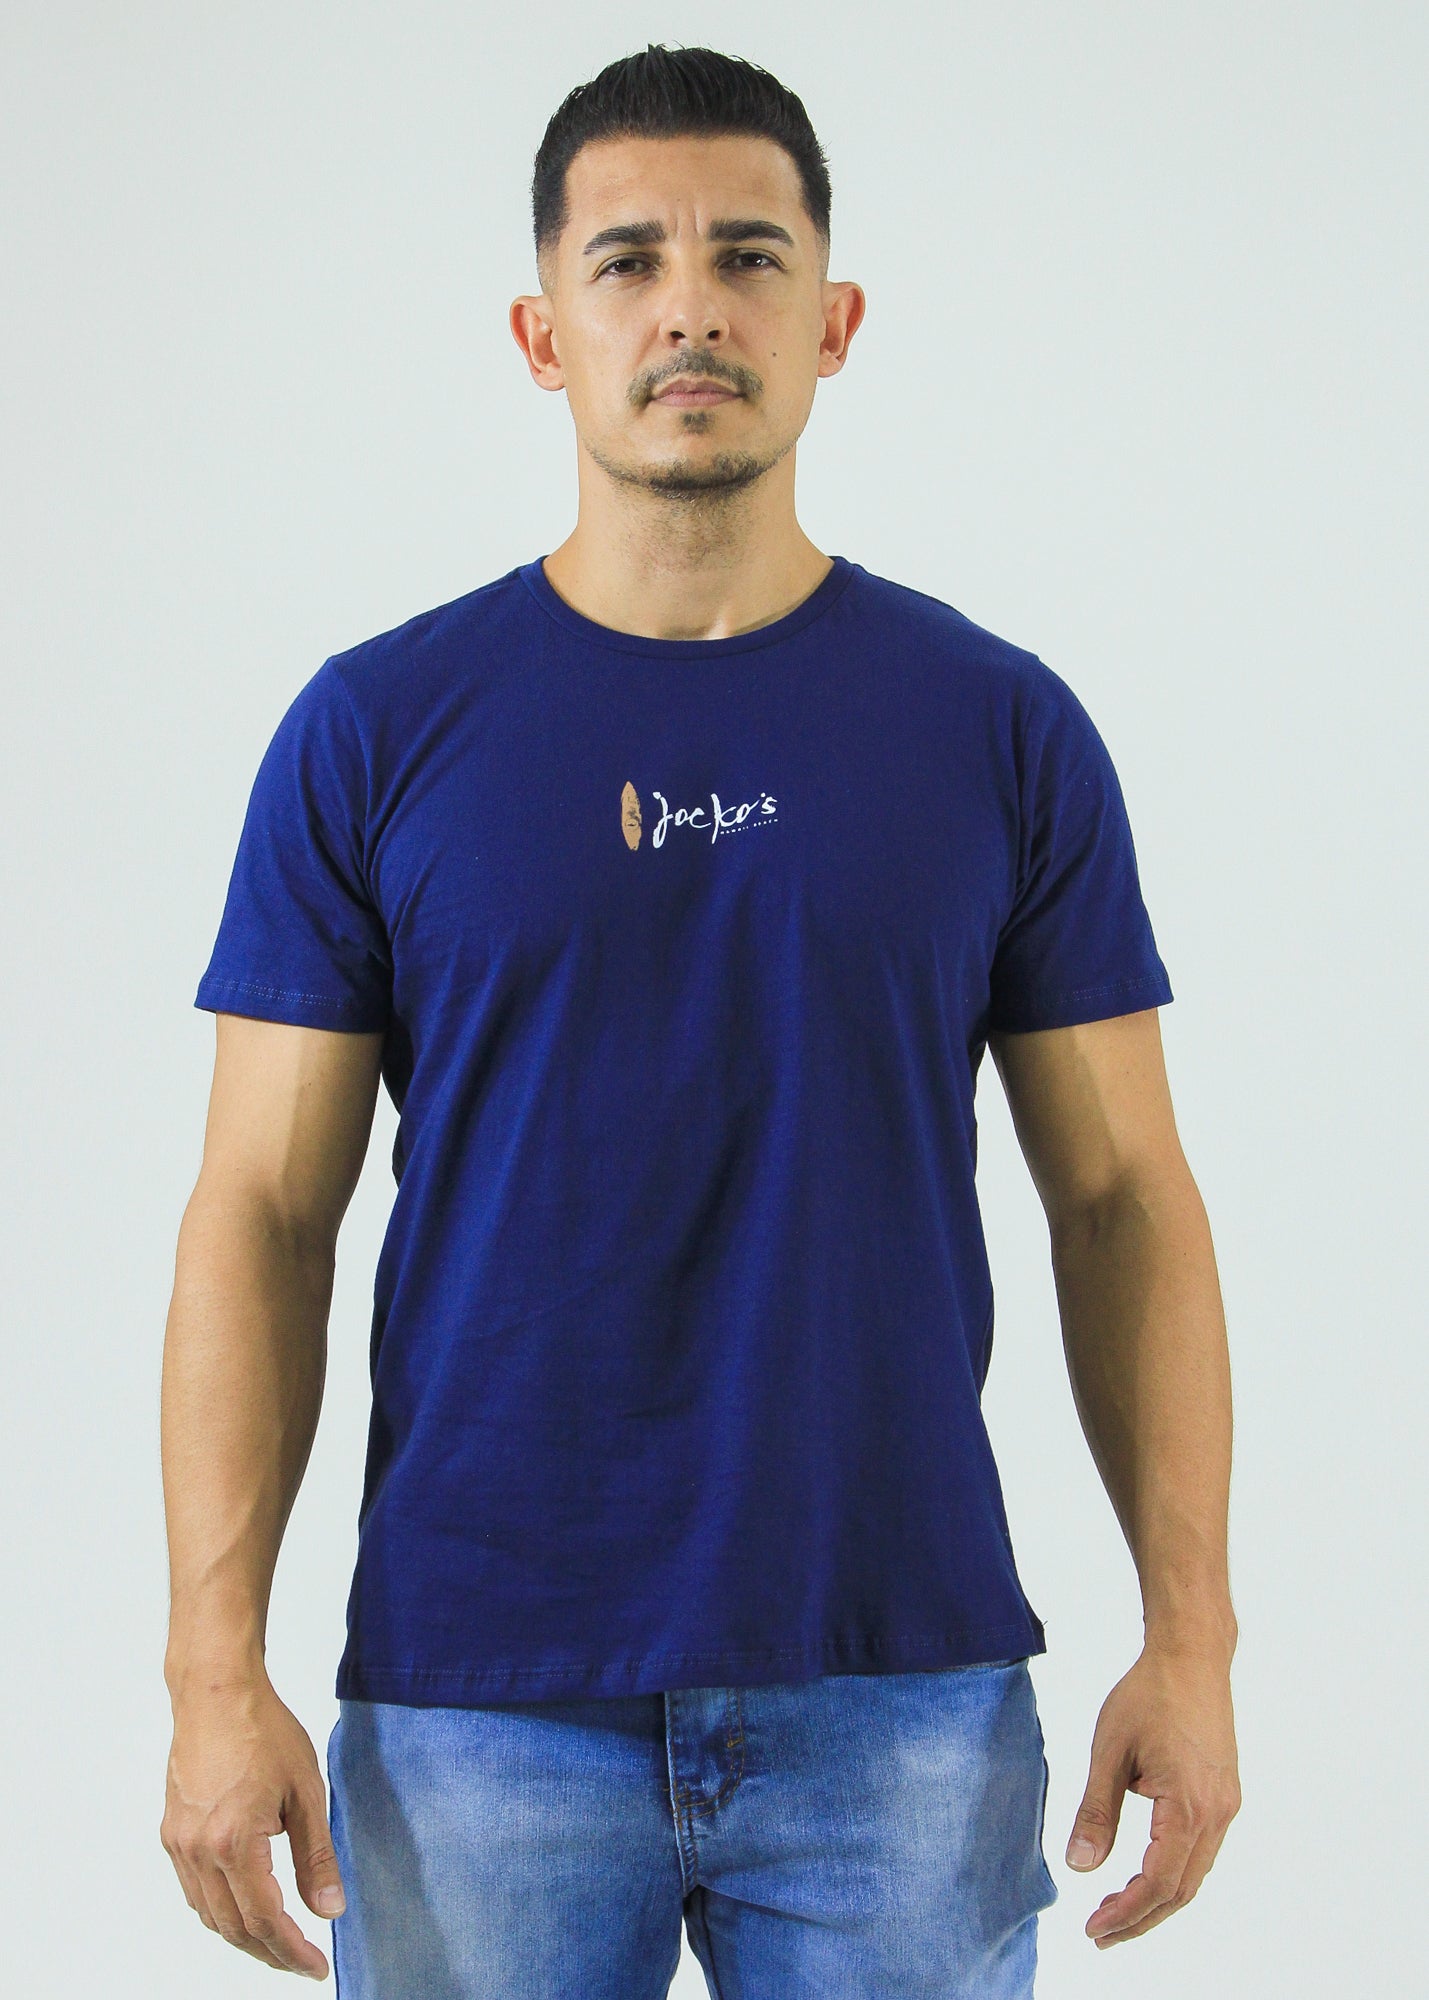 Camiseta Estampada Jocko's - Azul Marinho